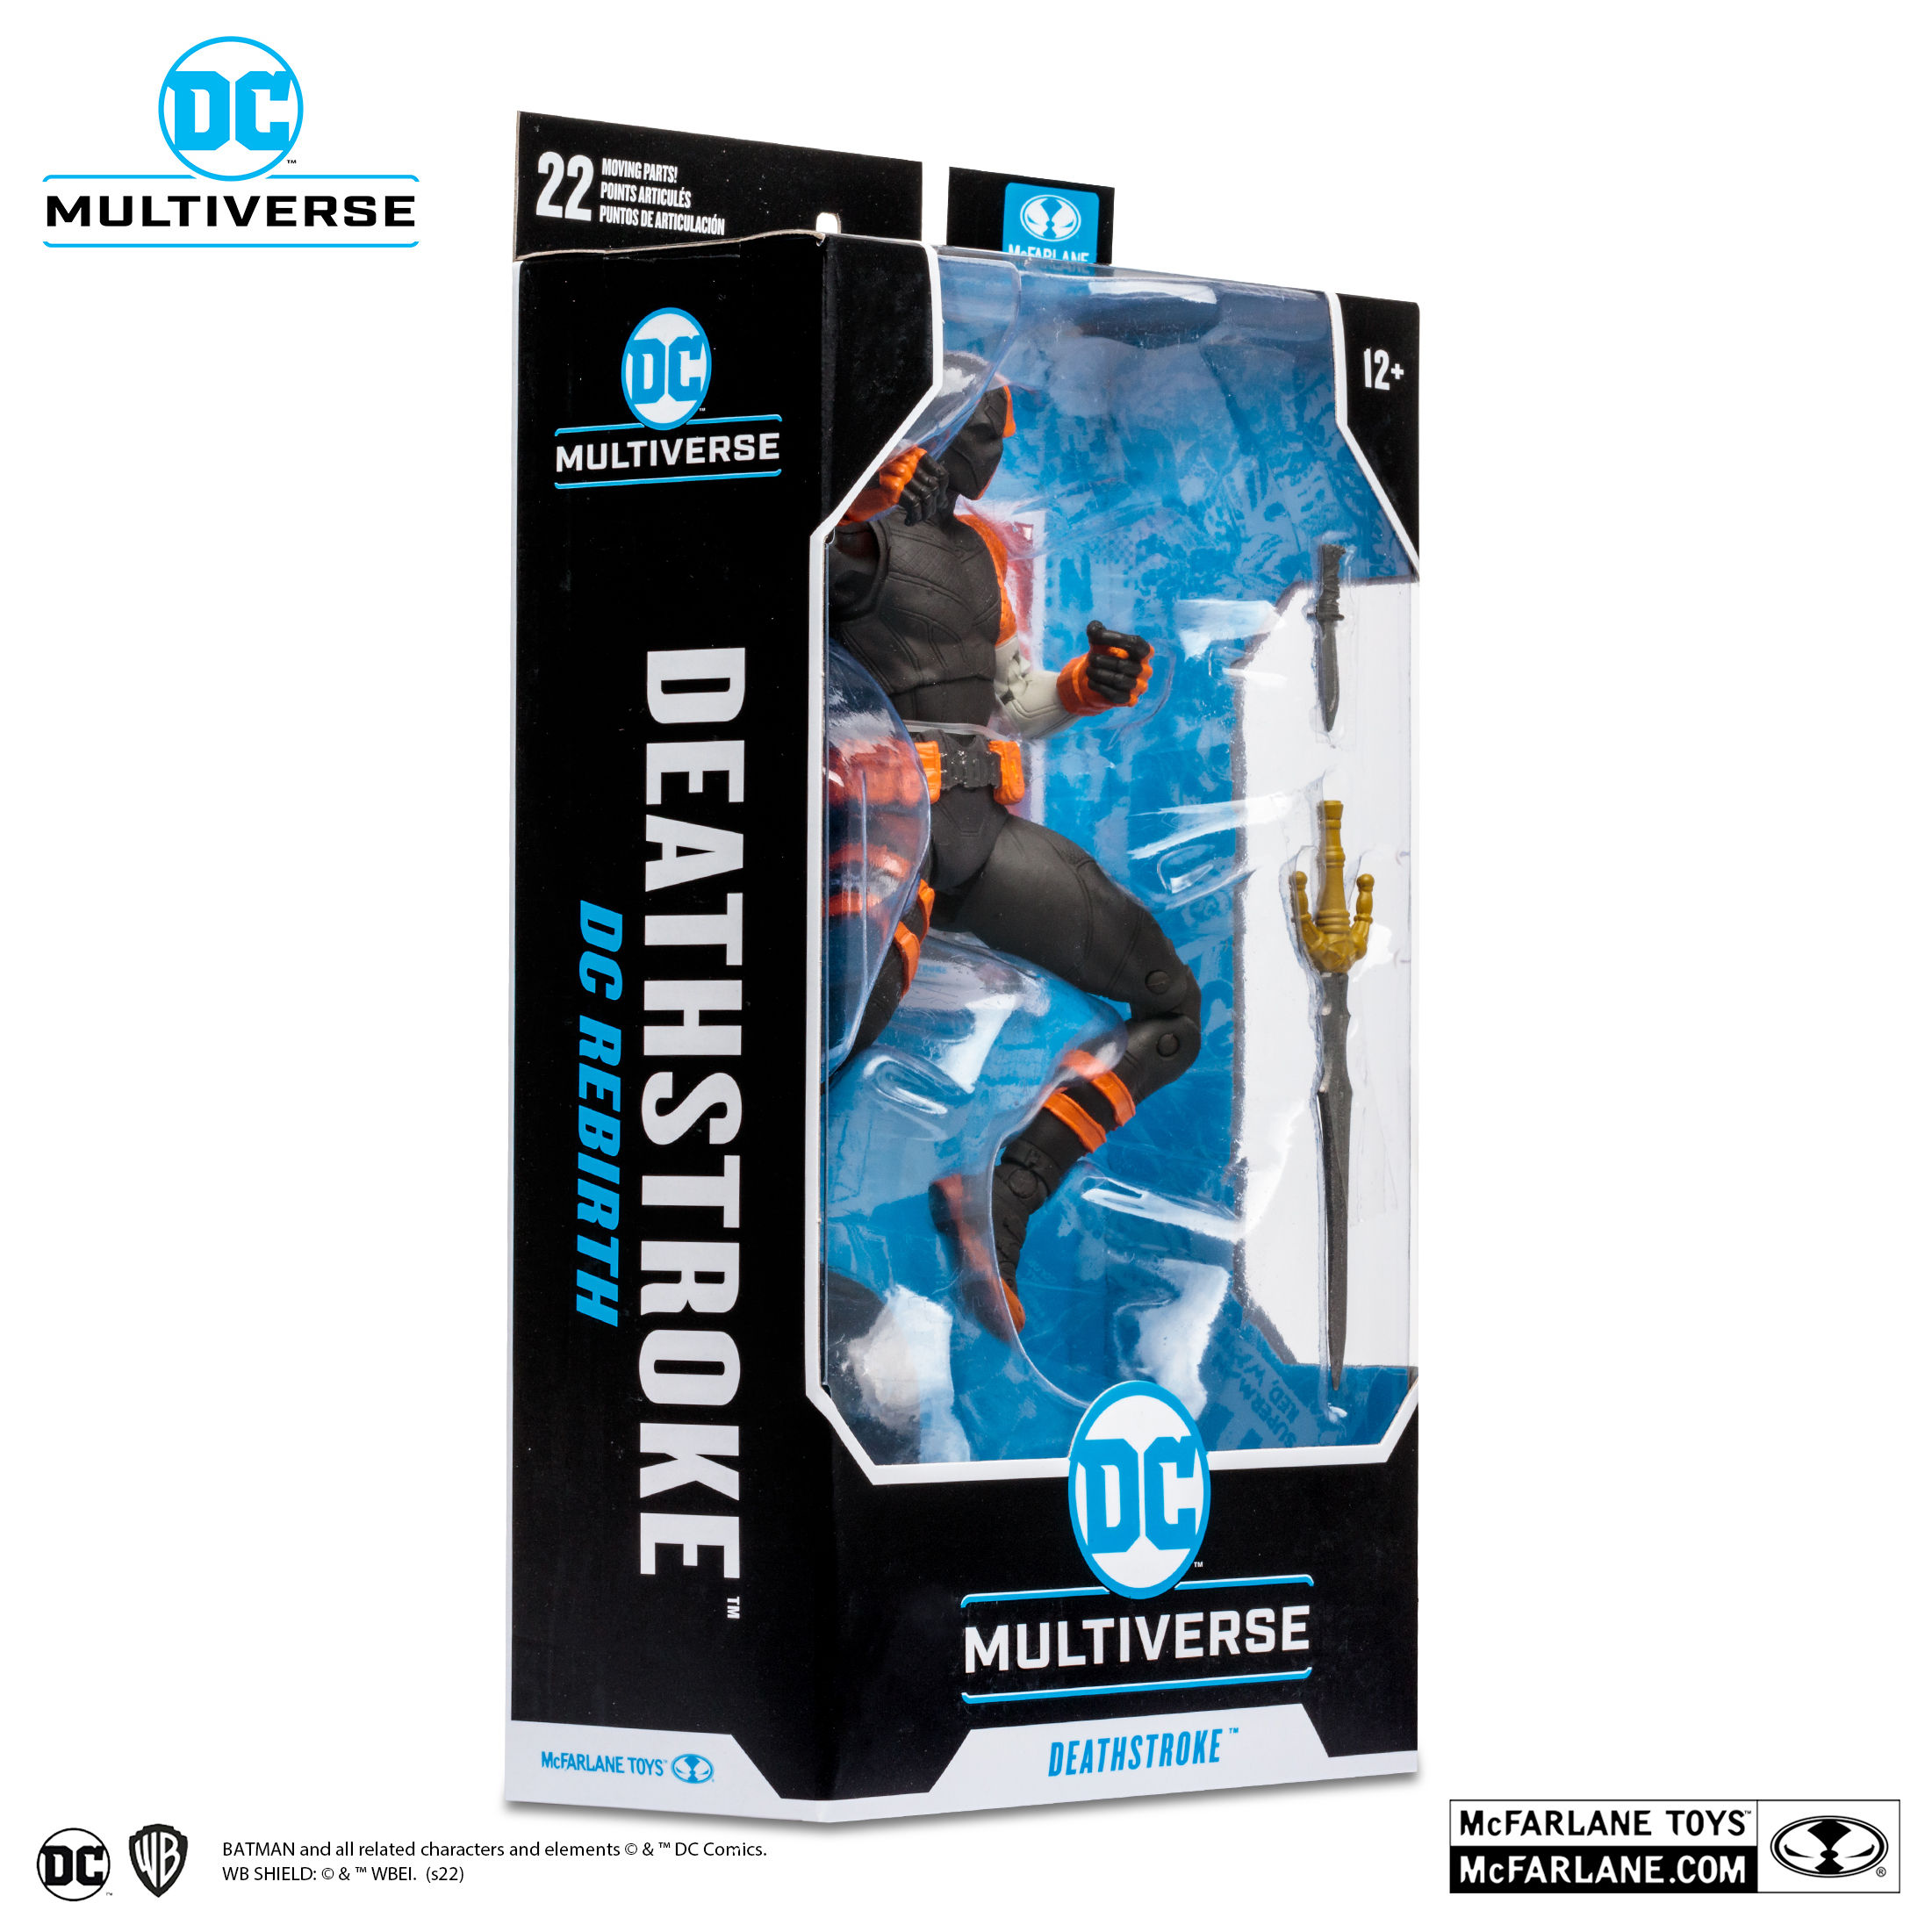 McFarlane Toys DC Multiverse Deathstroke